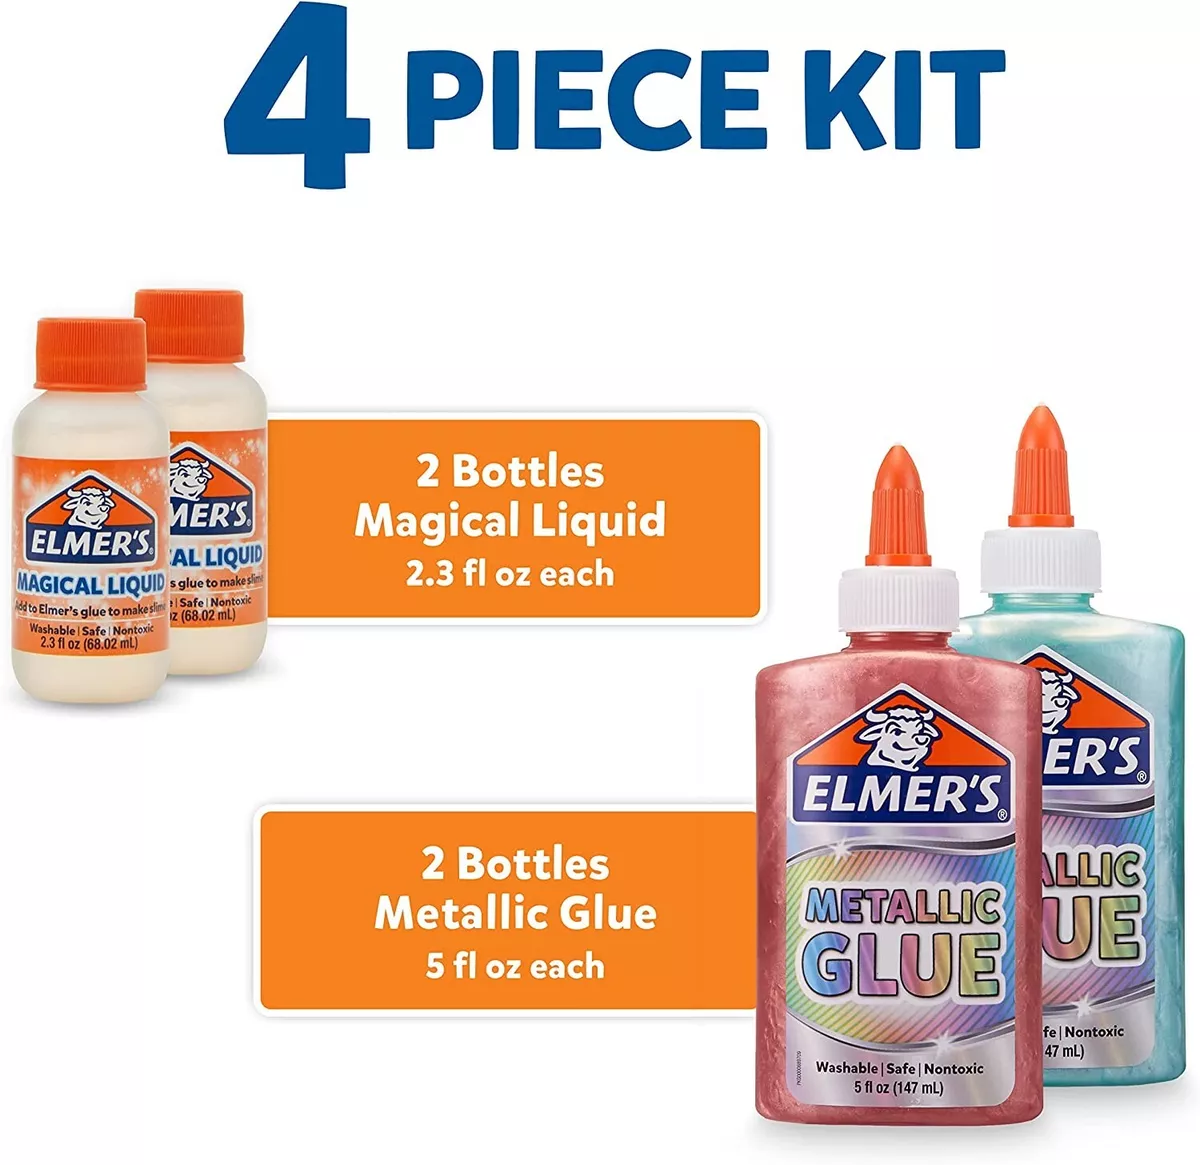 Elmer's Metallic Slime Kit New in Box 4 piece kit Teal & Pink Metallic Glue